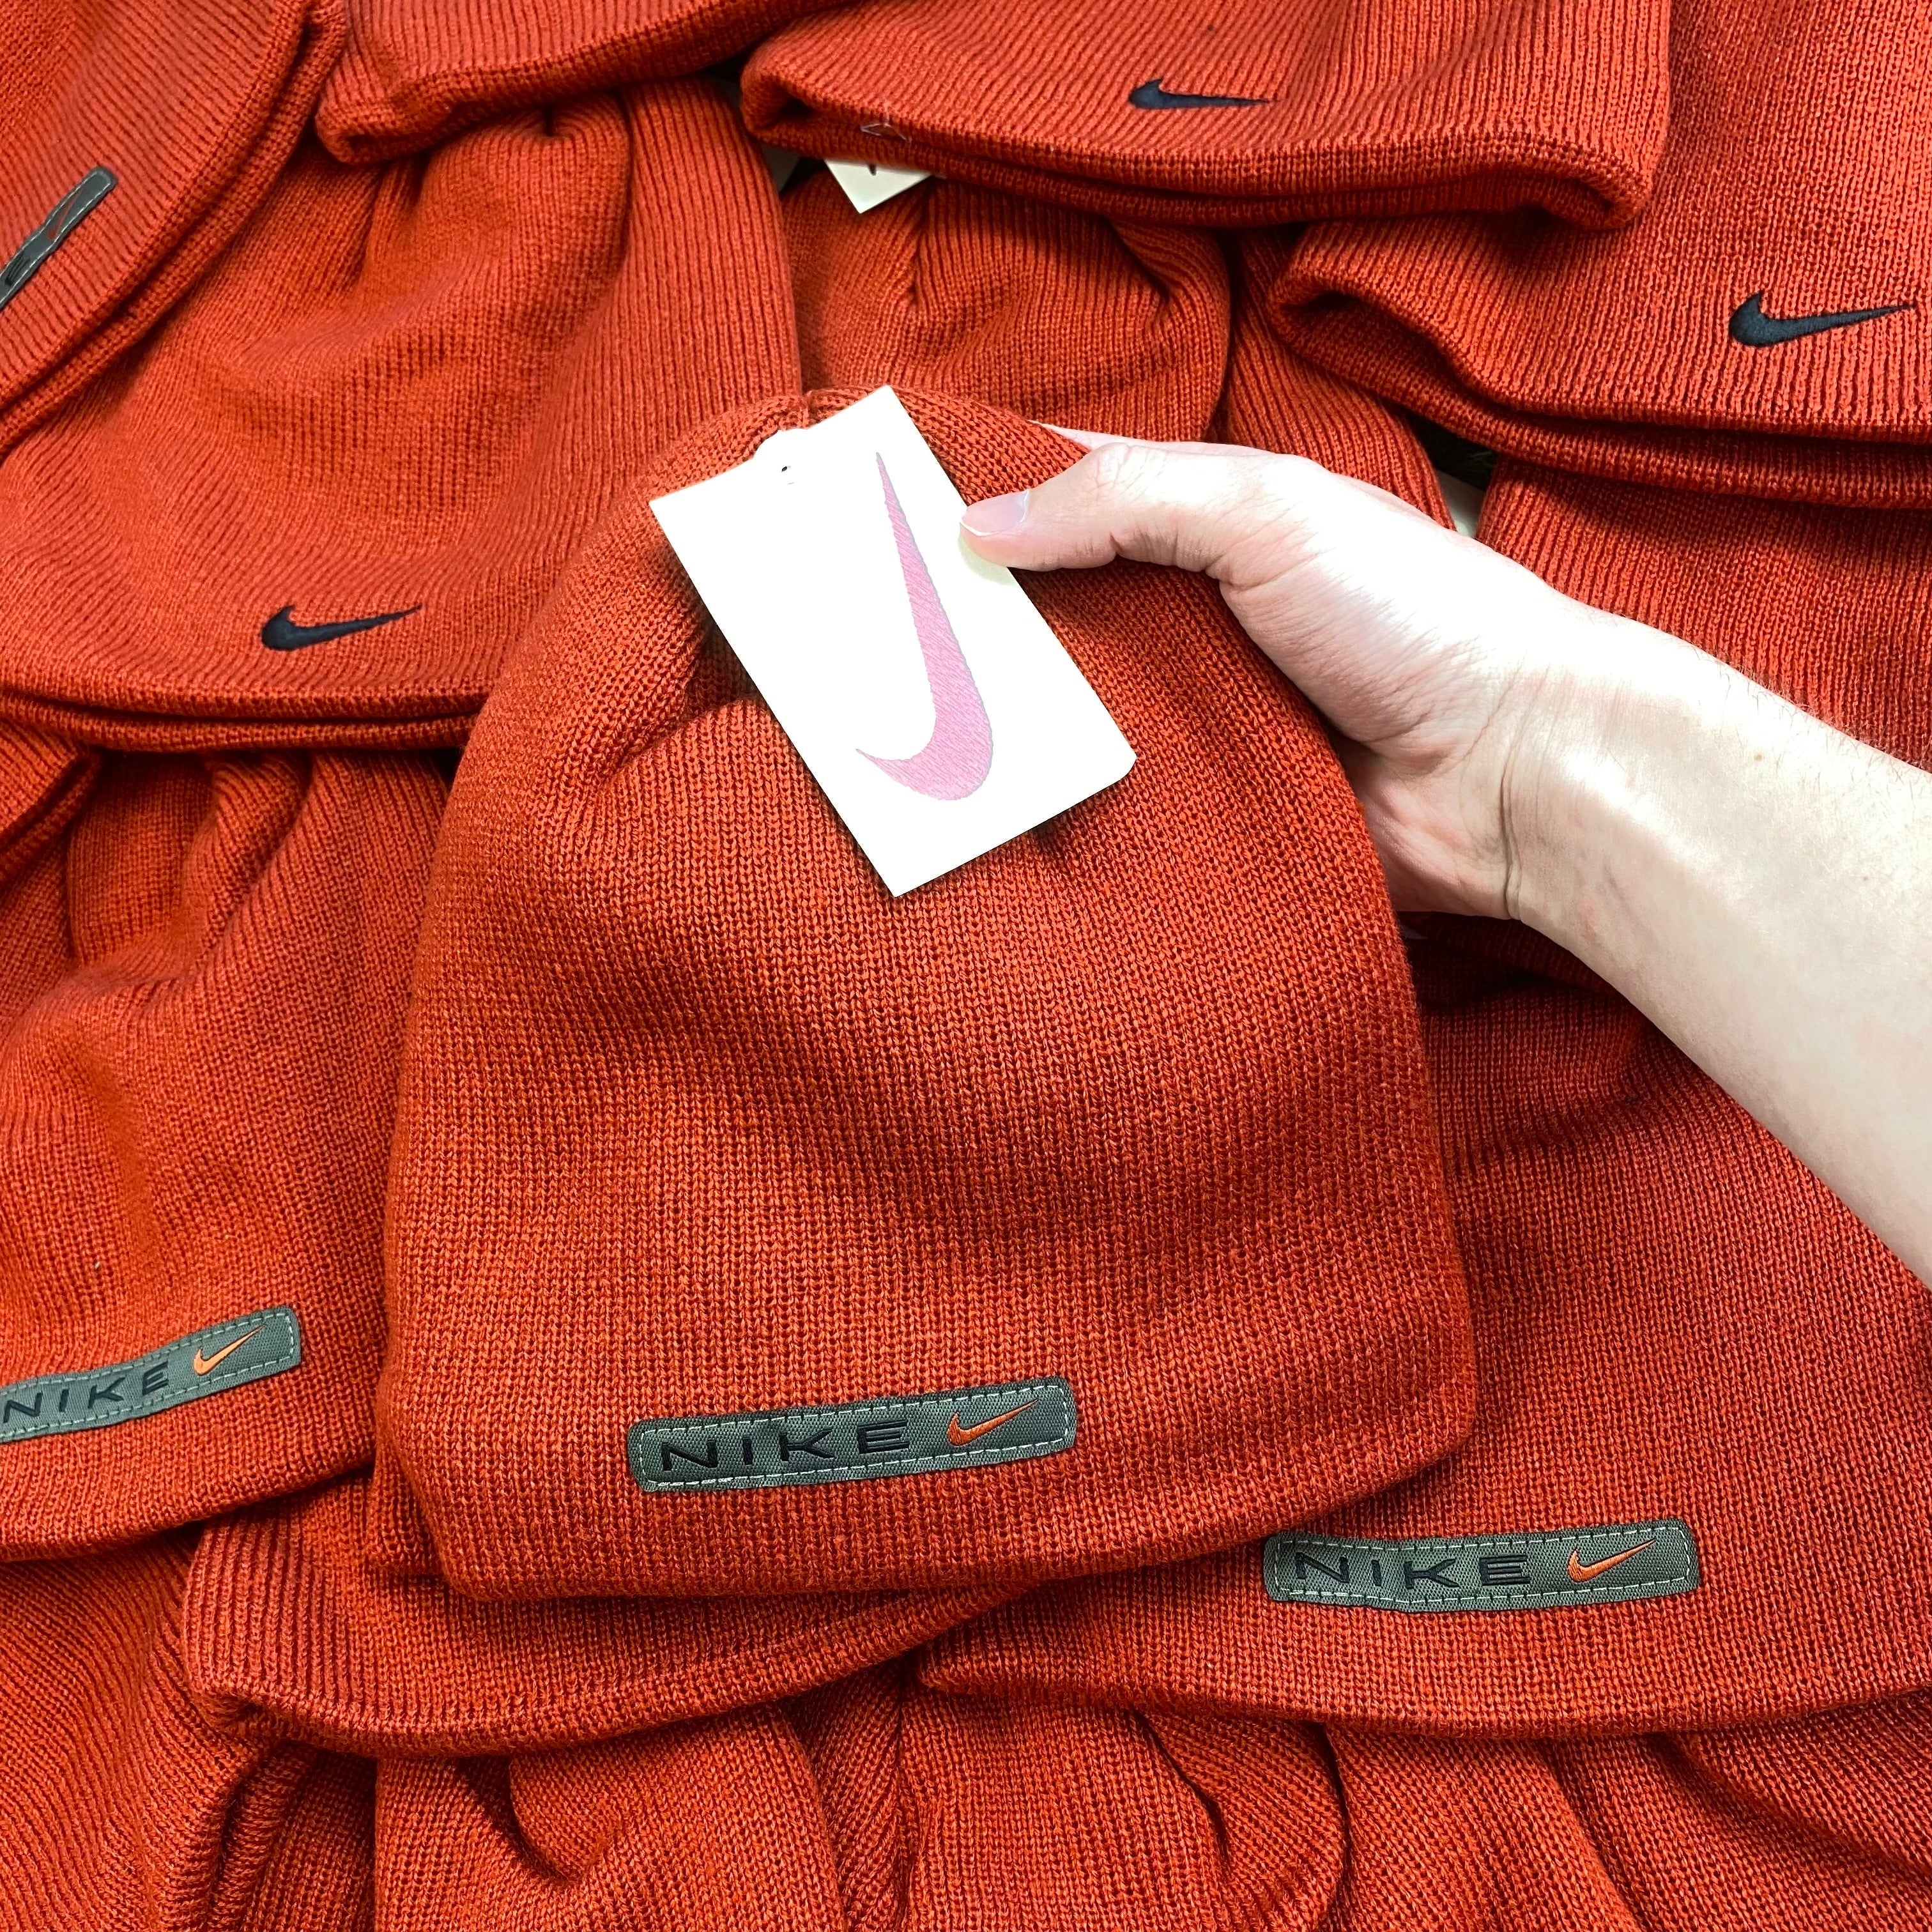 Vintage Nike Fleece Beanie Hat Red Orange